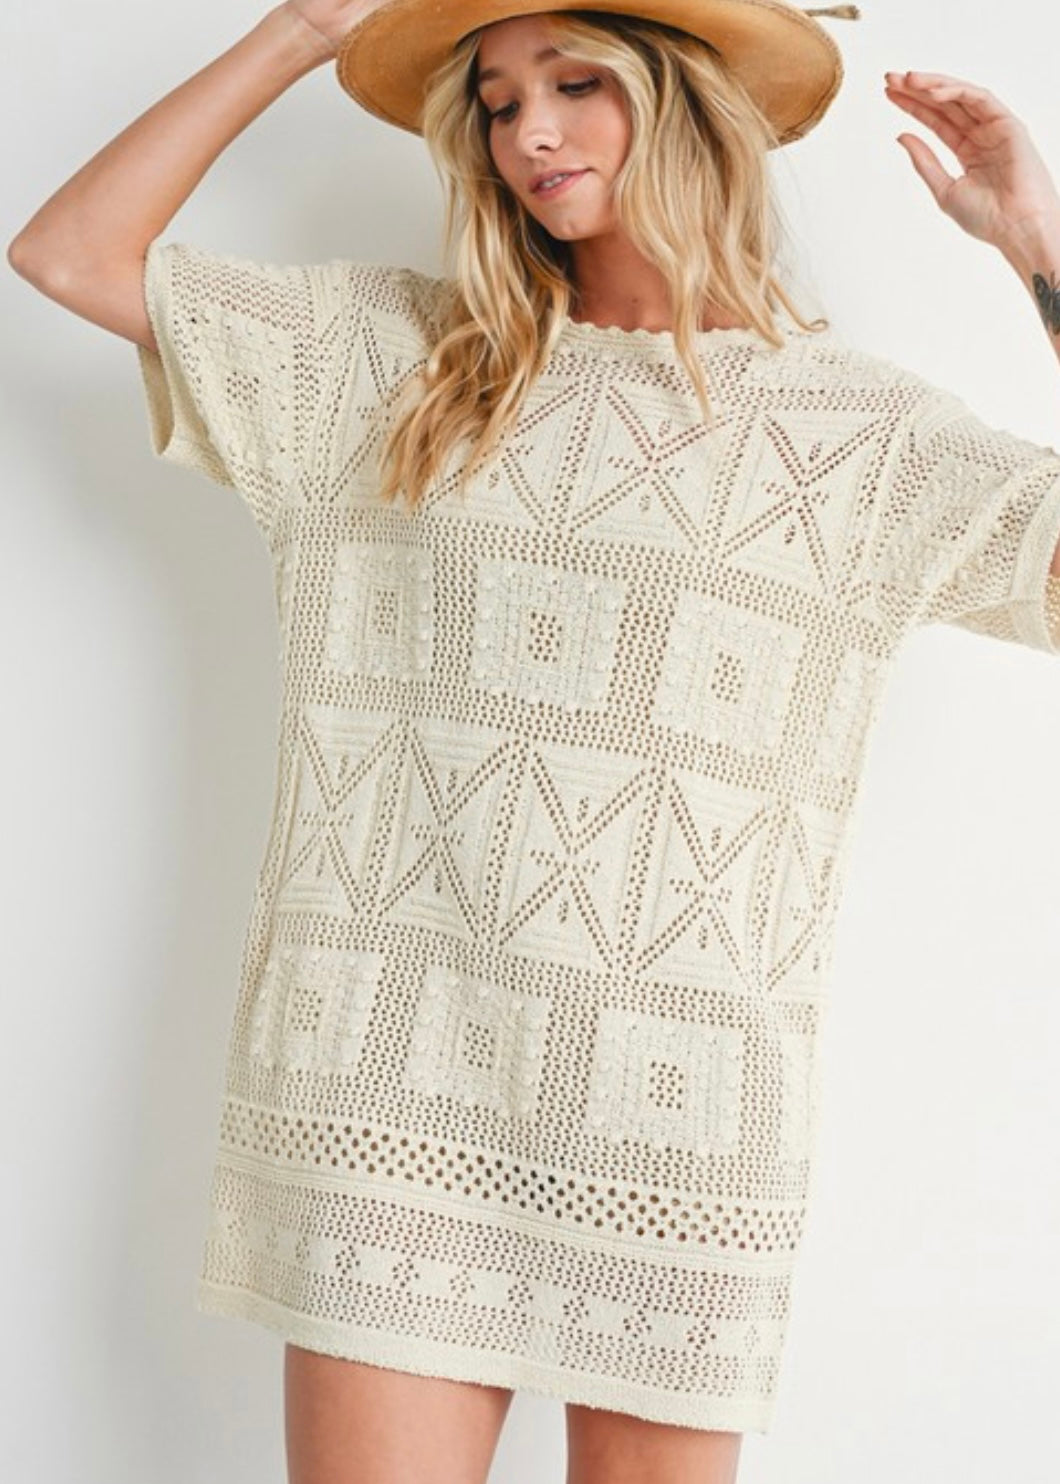 Aztec knit dress